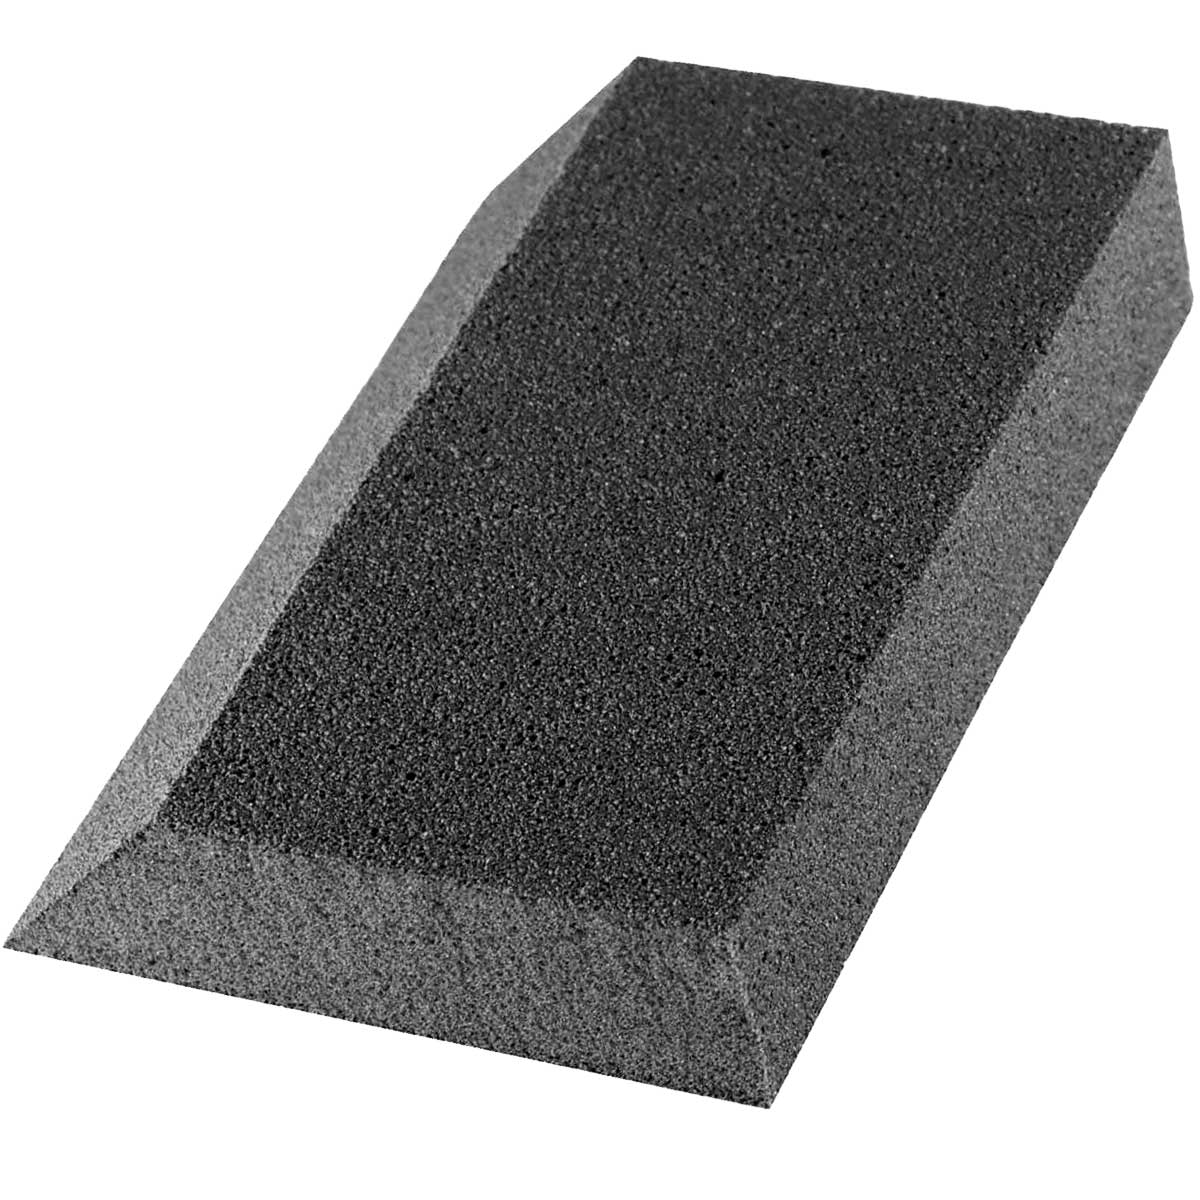 3M™ Extra Large Angled Drywall Sanding Sponge 910-DSA, 2 7/8 in x